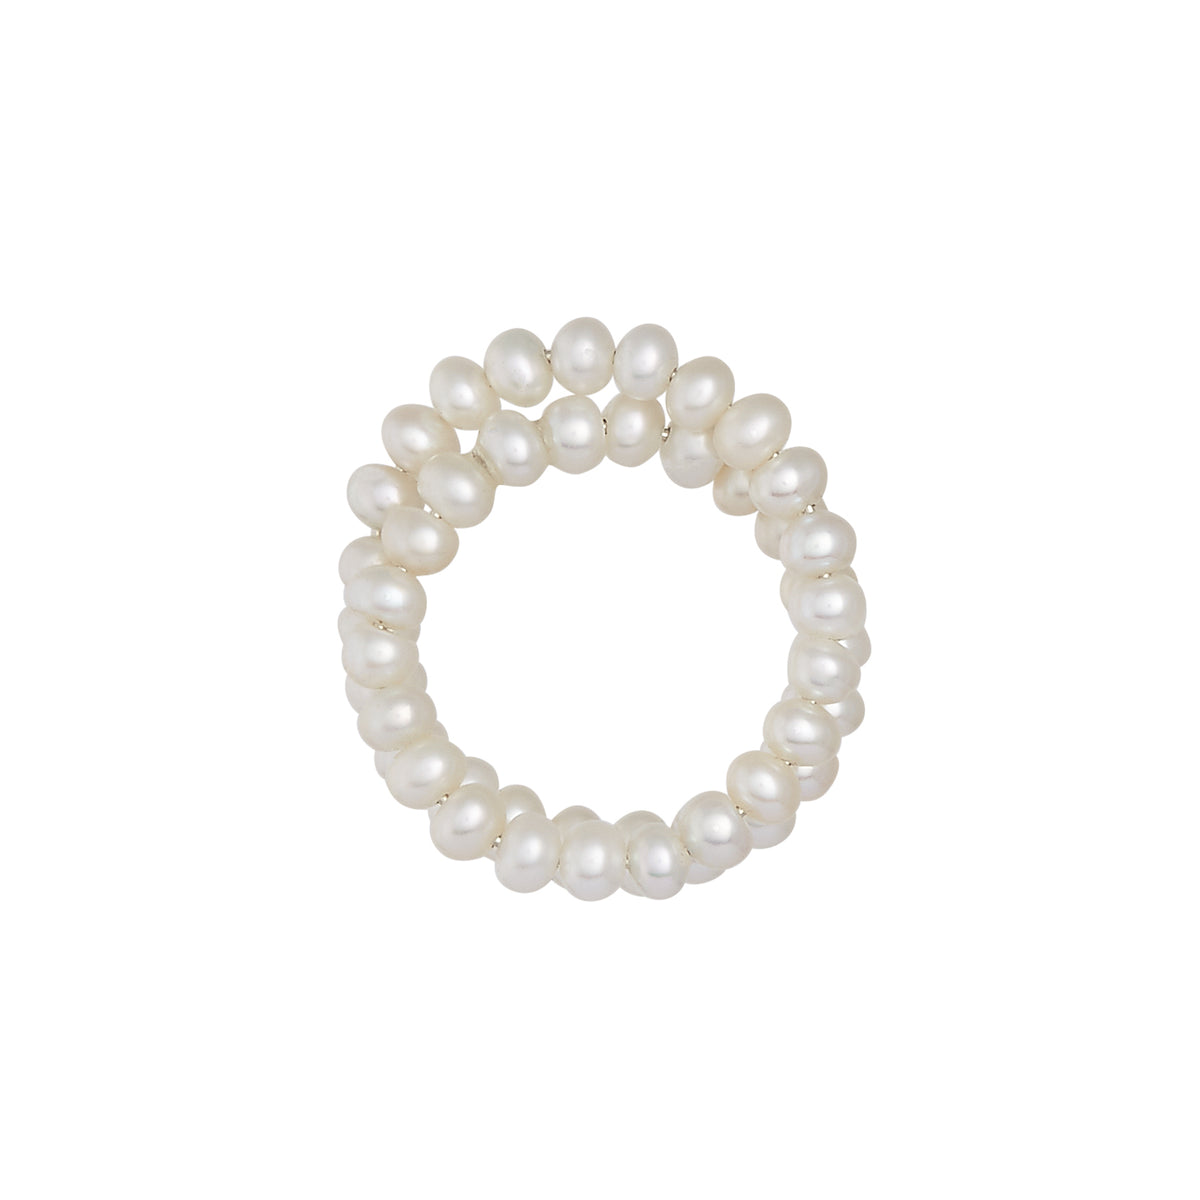 VIKA jewels sweet water pearls Süsswasser Perle Ring recycled Sterling Silver silber handmade Bali spiral sustainable nachhaltig schmuck jewellery jewelry